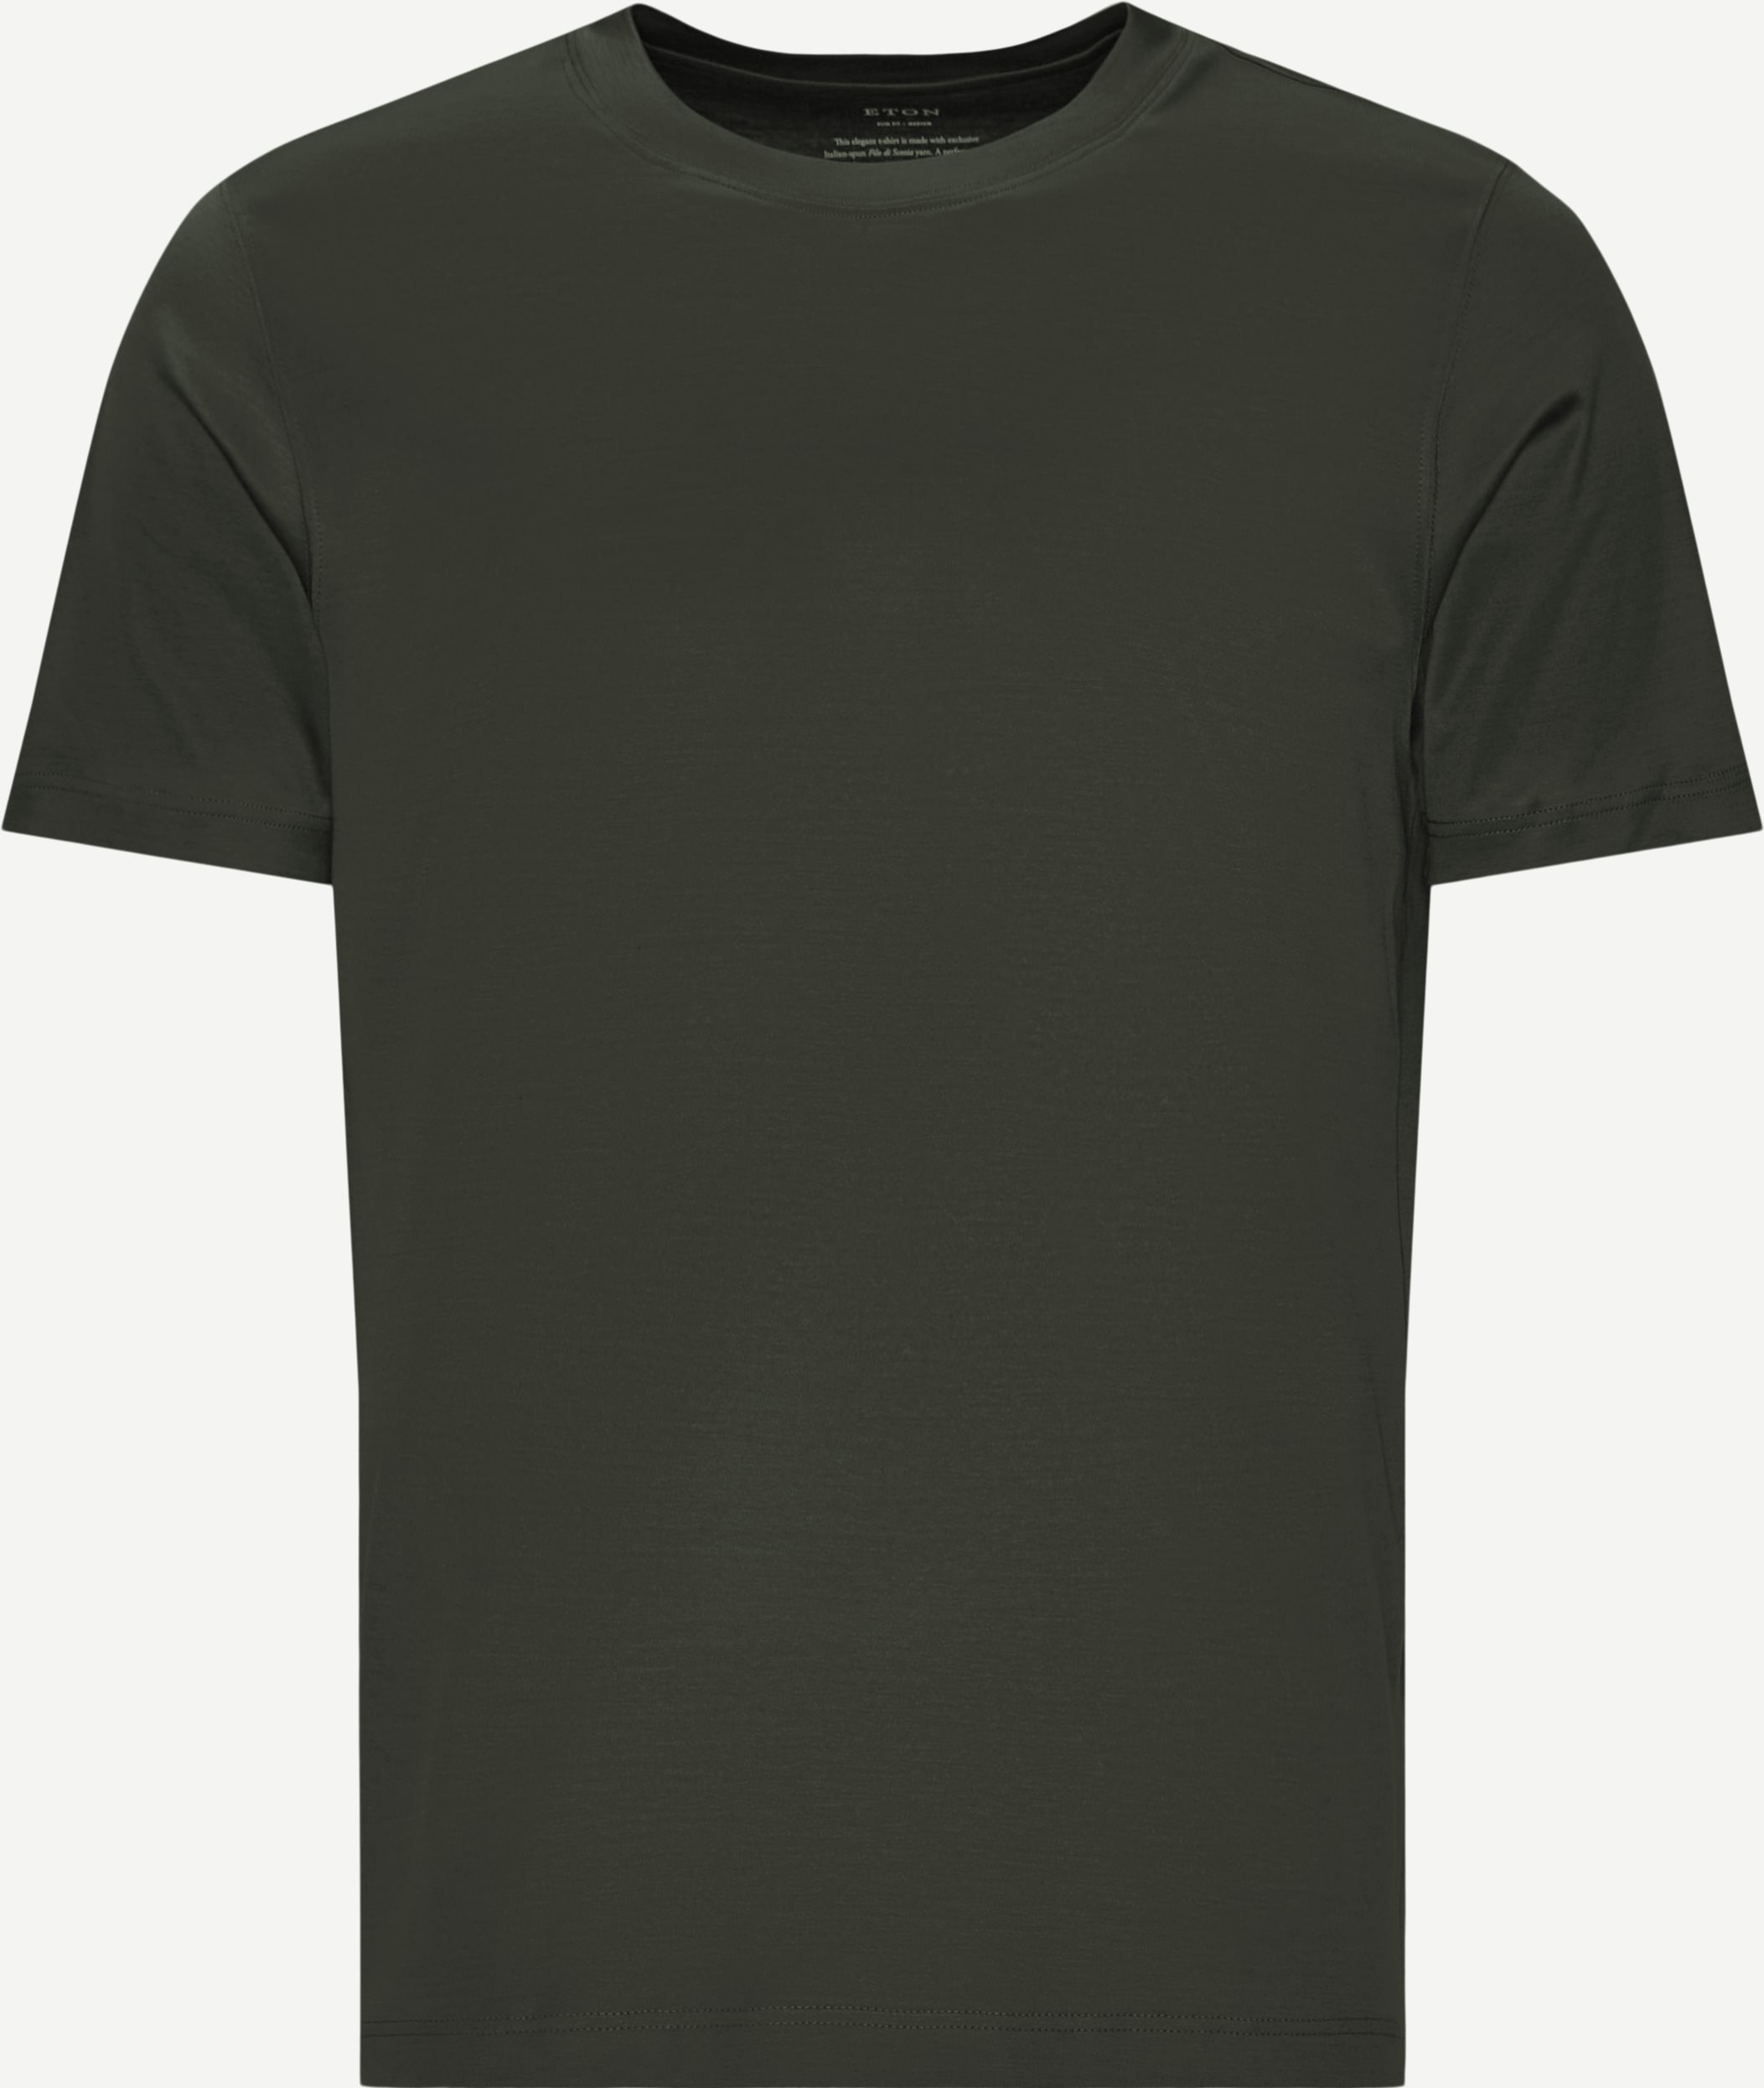 T-shirts - Slim fit - Army